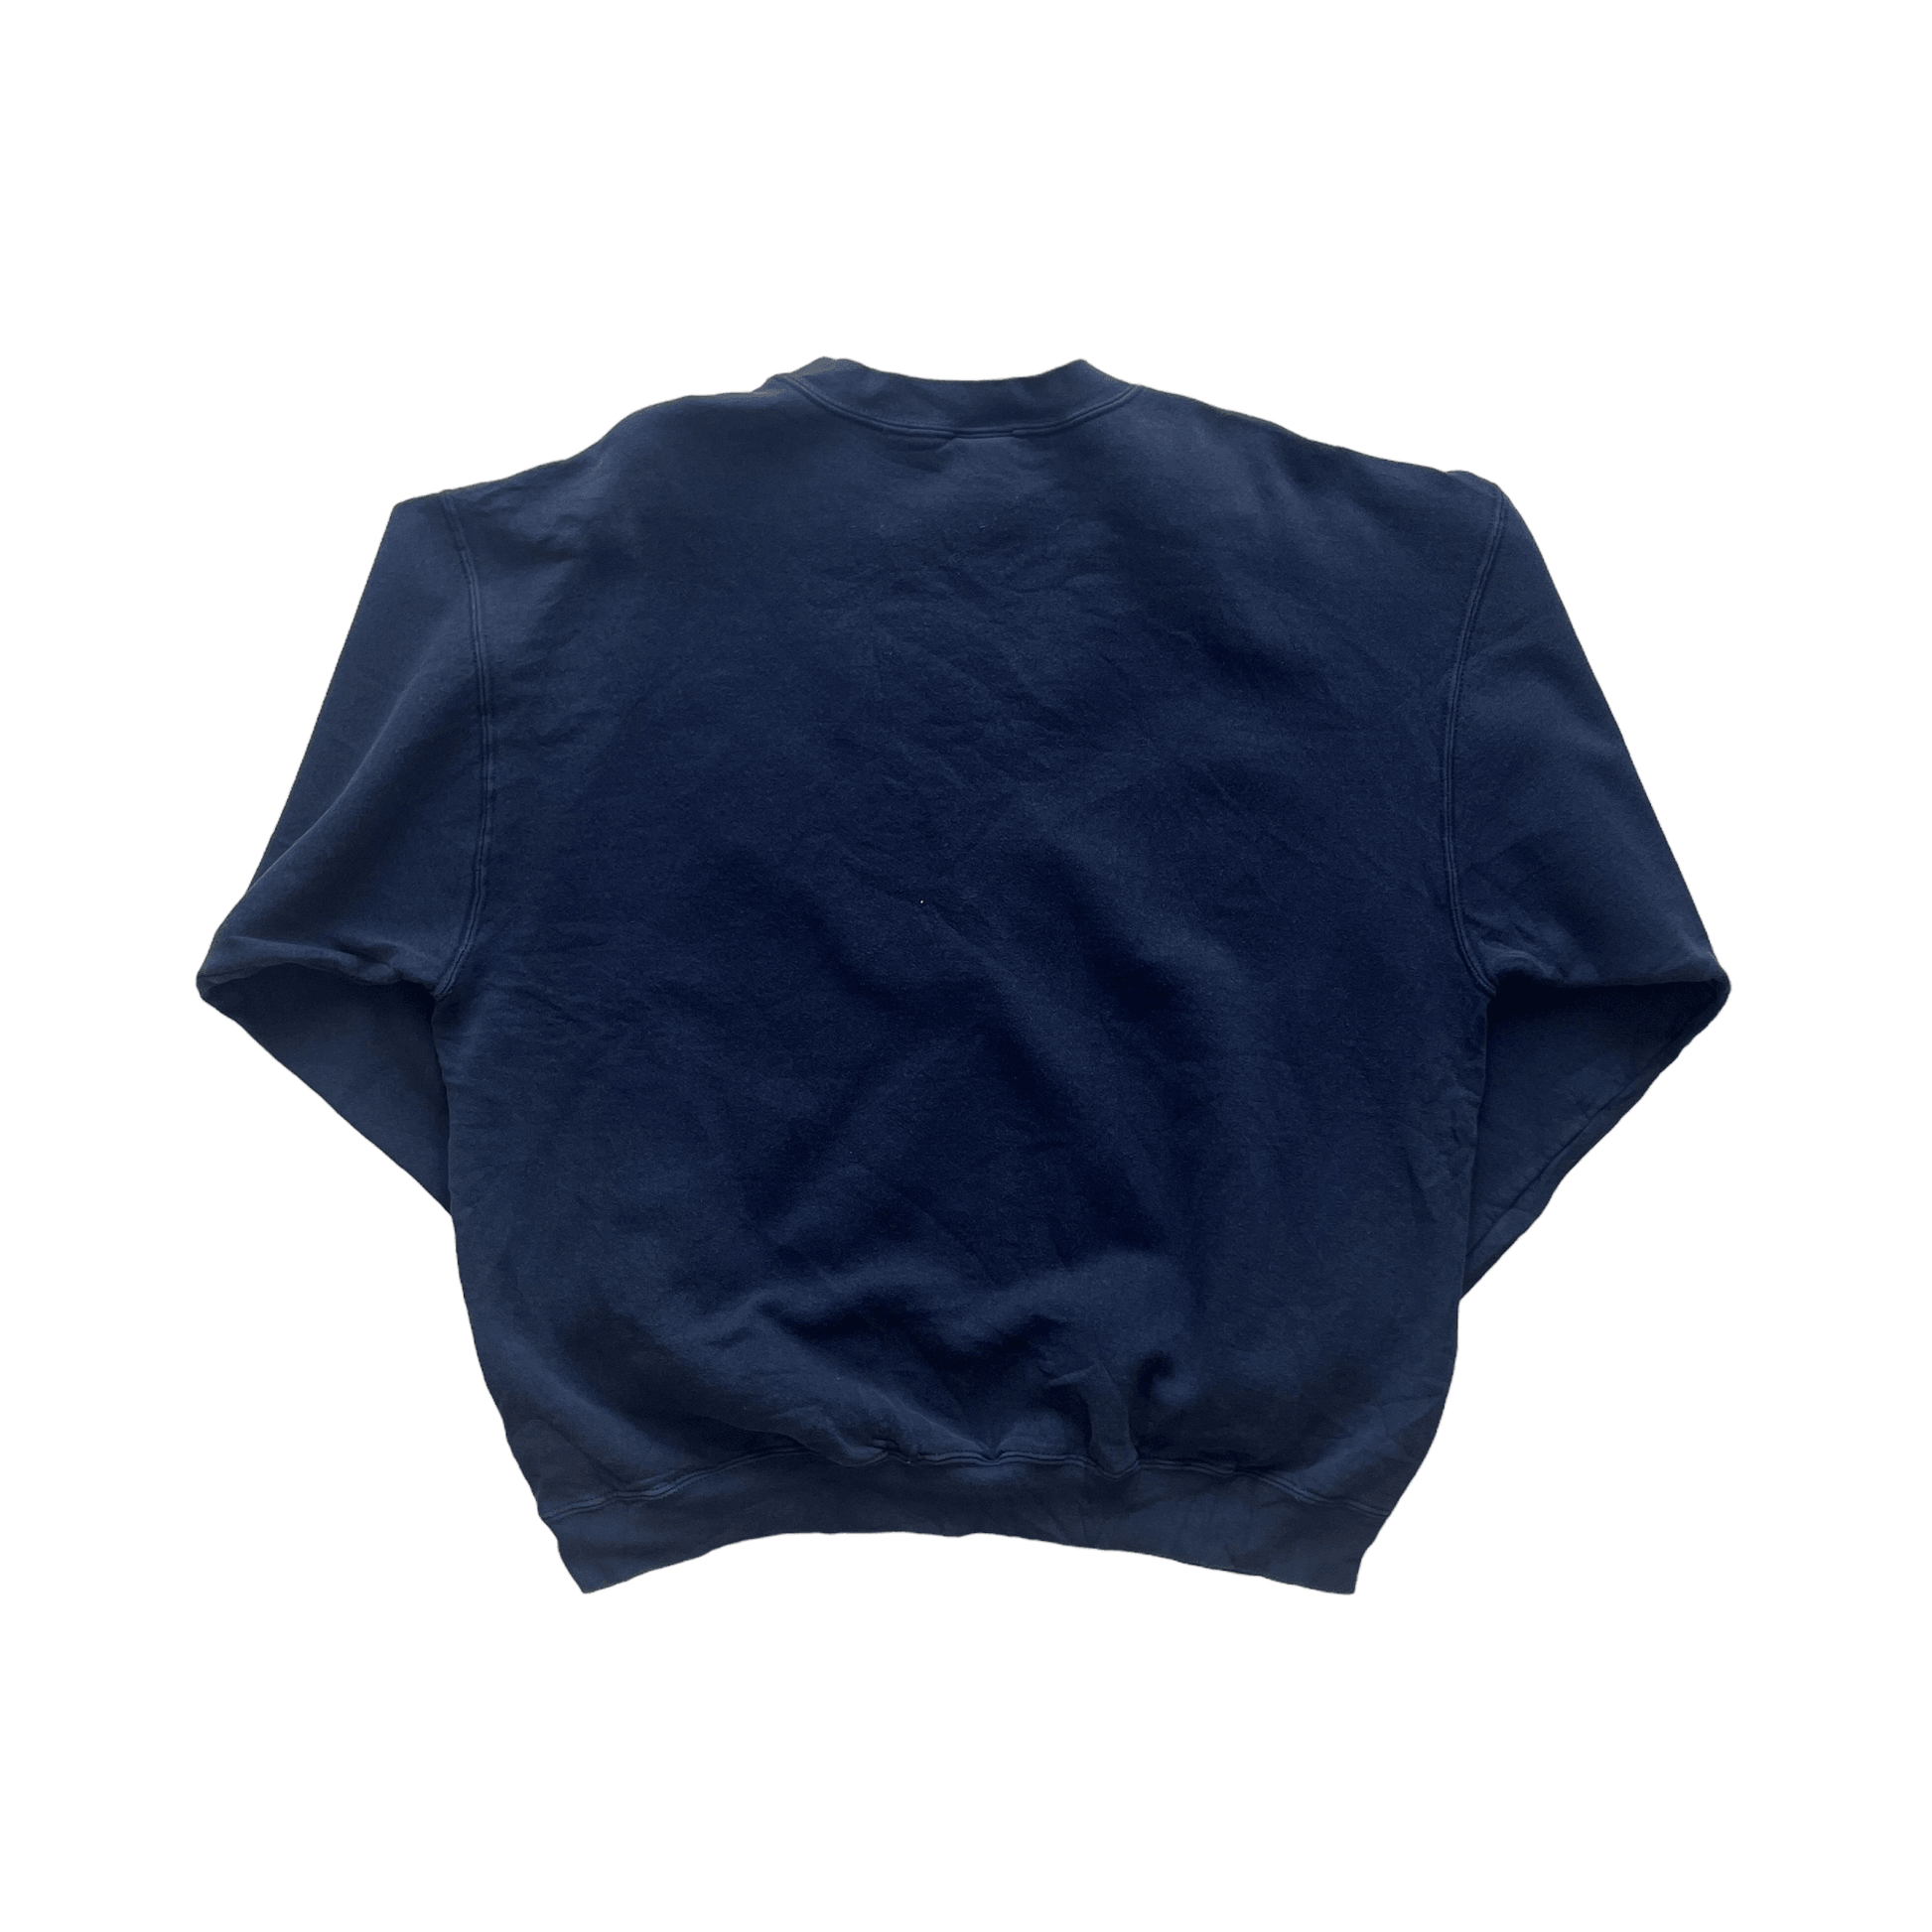 Vintage 90s Navy Blue Nike USA Football Sweatshirt - Medium (Recommended Size - Small) - The Streetwear Studio